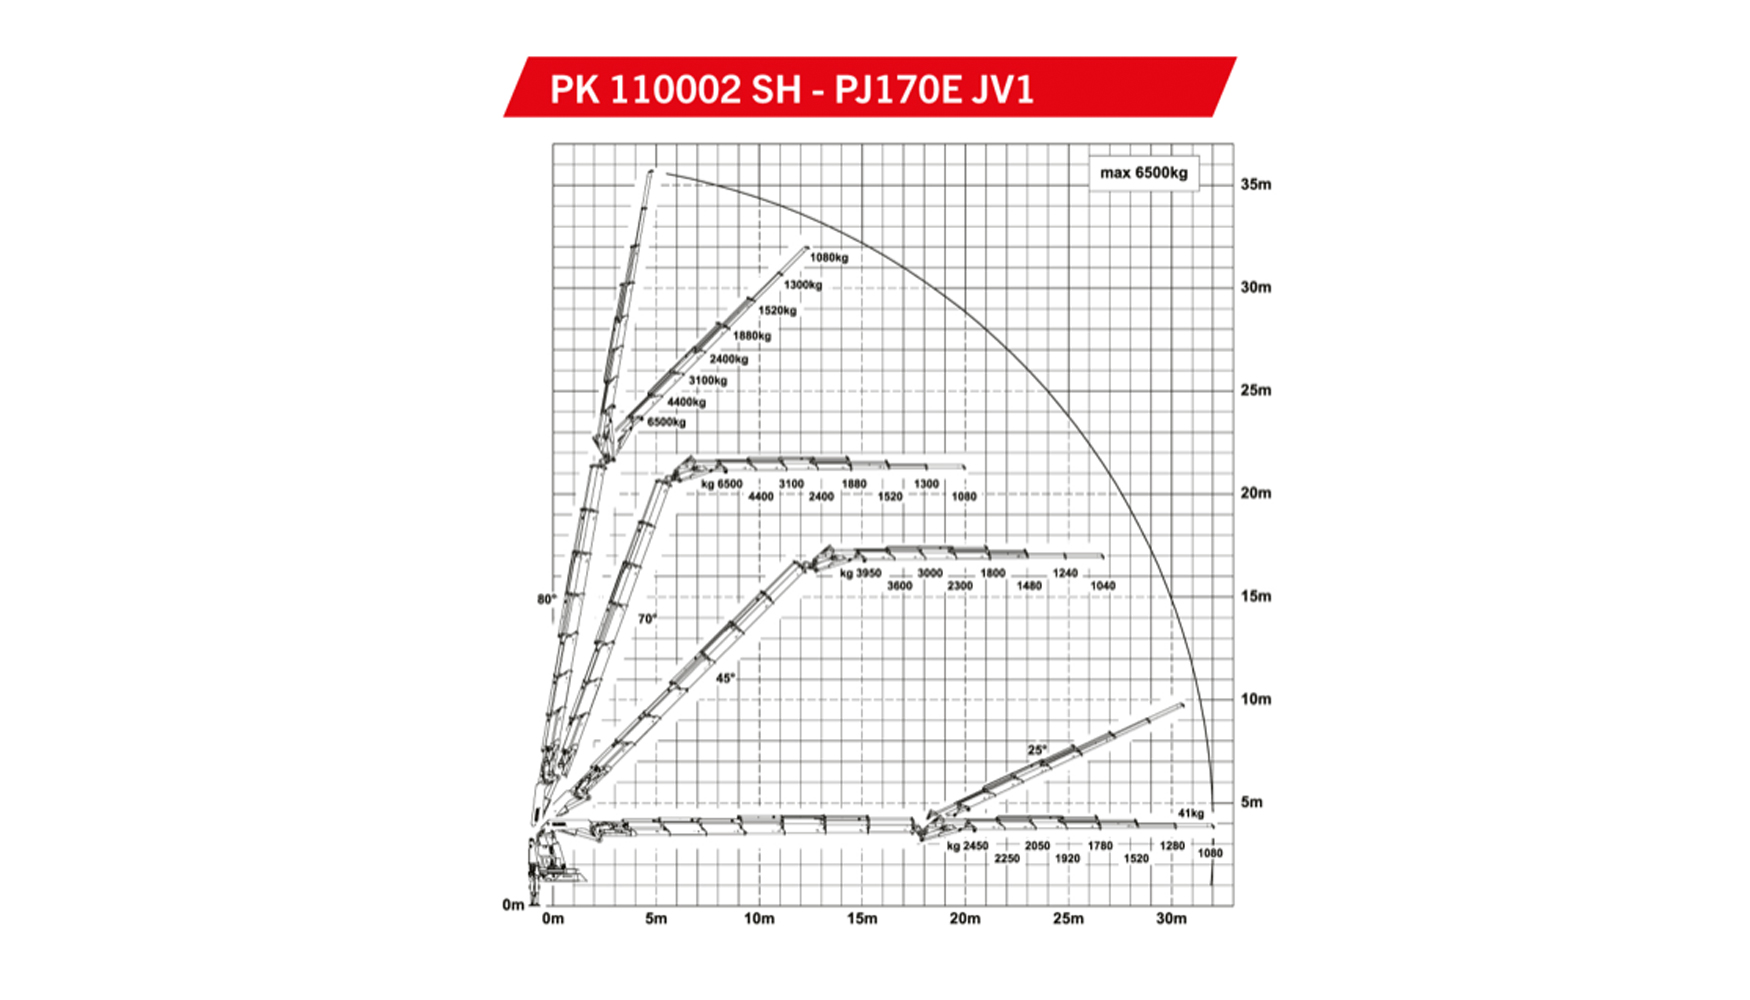 Diagrama de carga de la PK 110002 SH con Fly -Jib PJ170